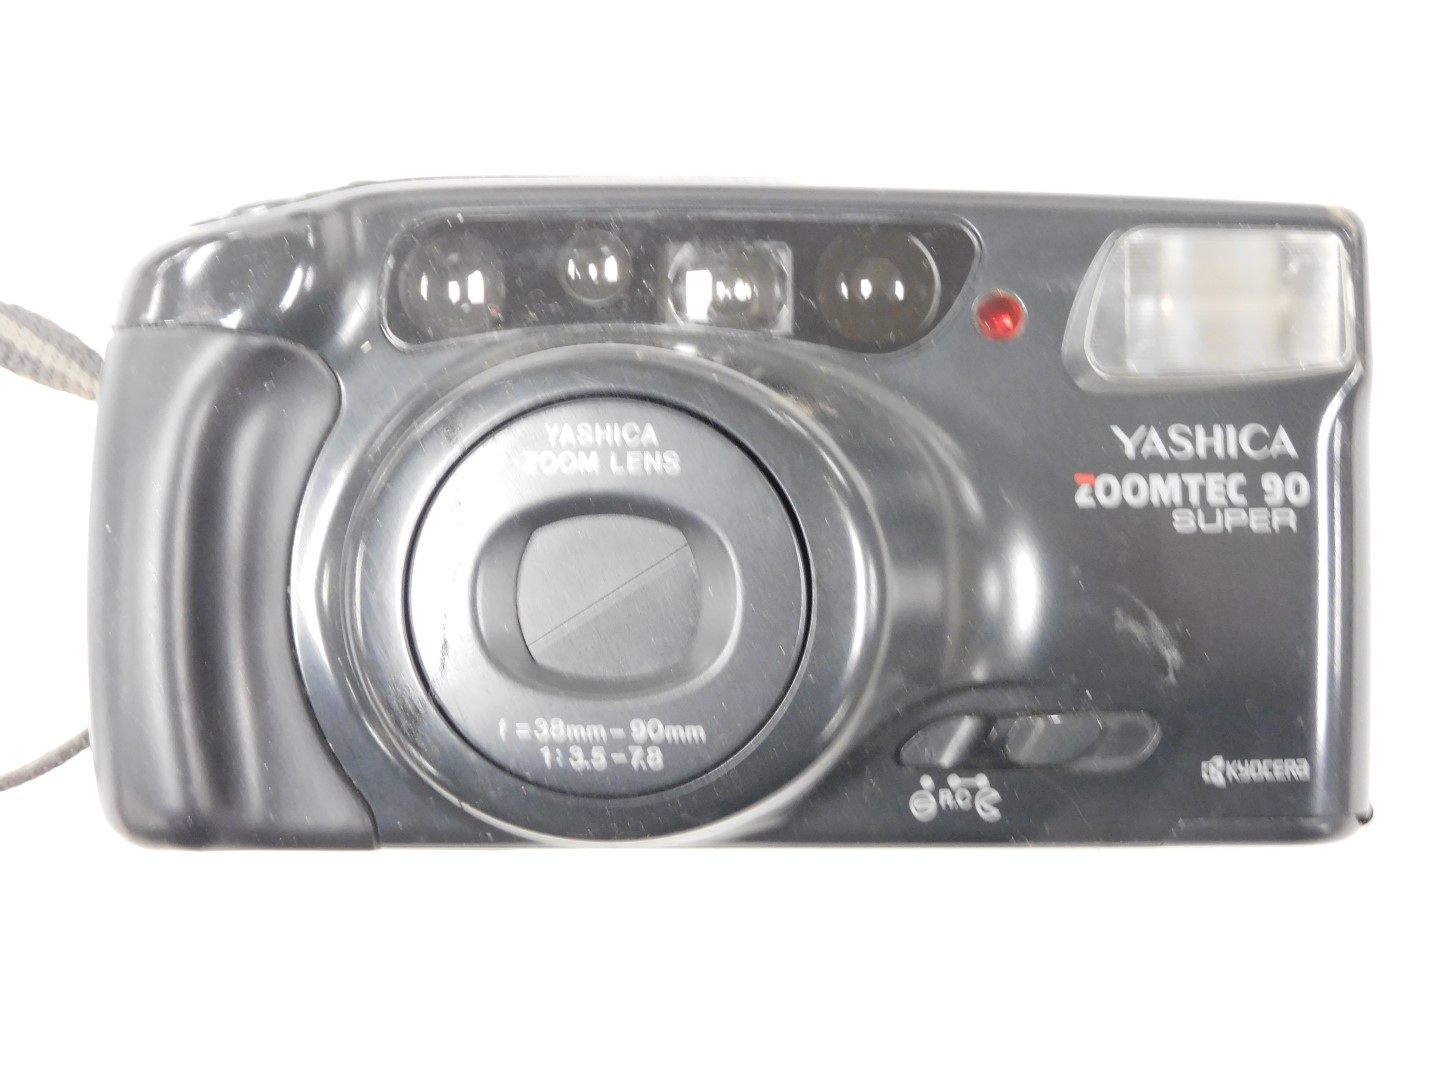 A Yashica Zoomtec 90 Super camera, Olympus Zoom AF AZ-330 camera, Miranda 24mm F2.8MC lens, and othe - Image 2 of 8